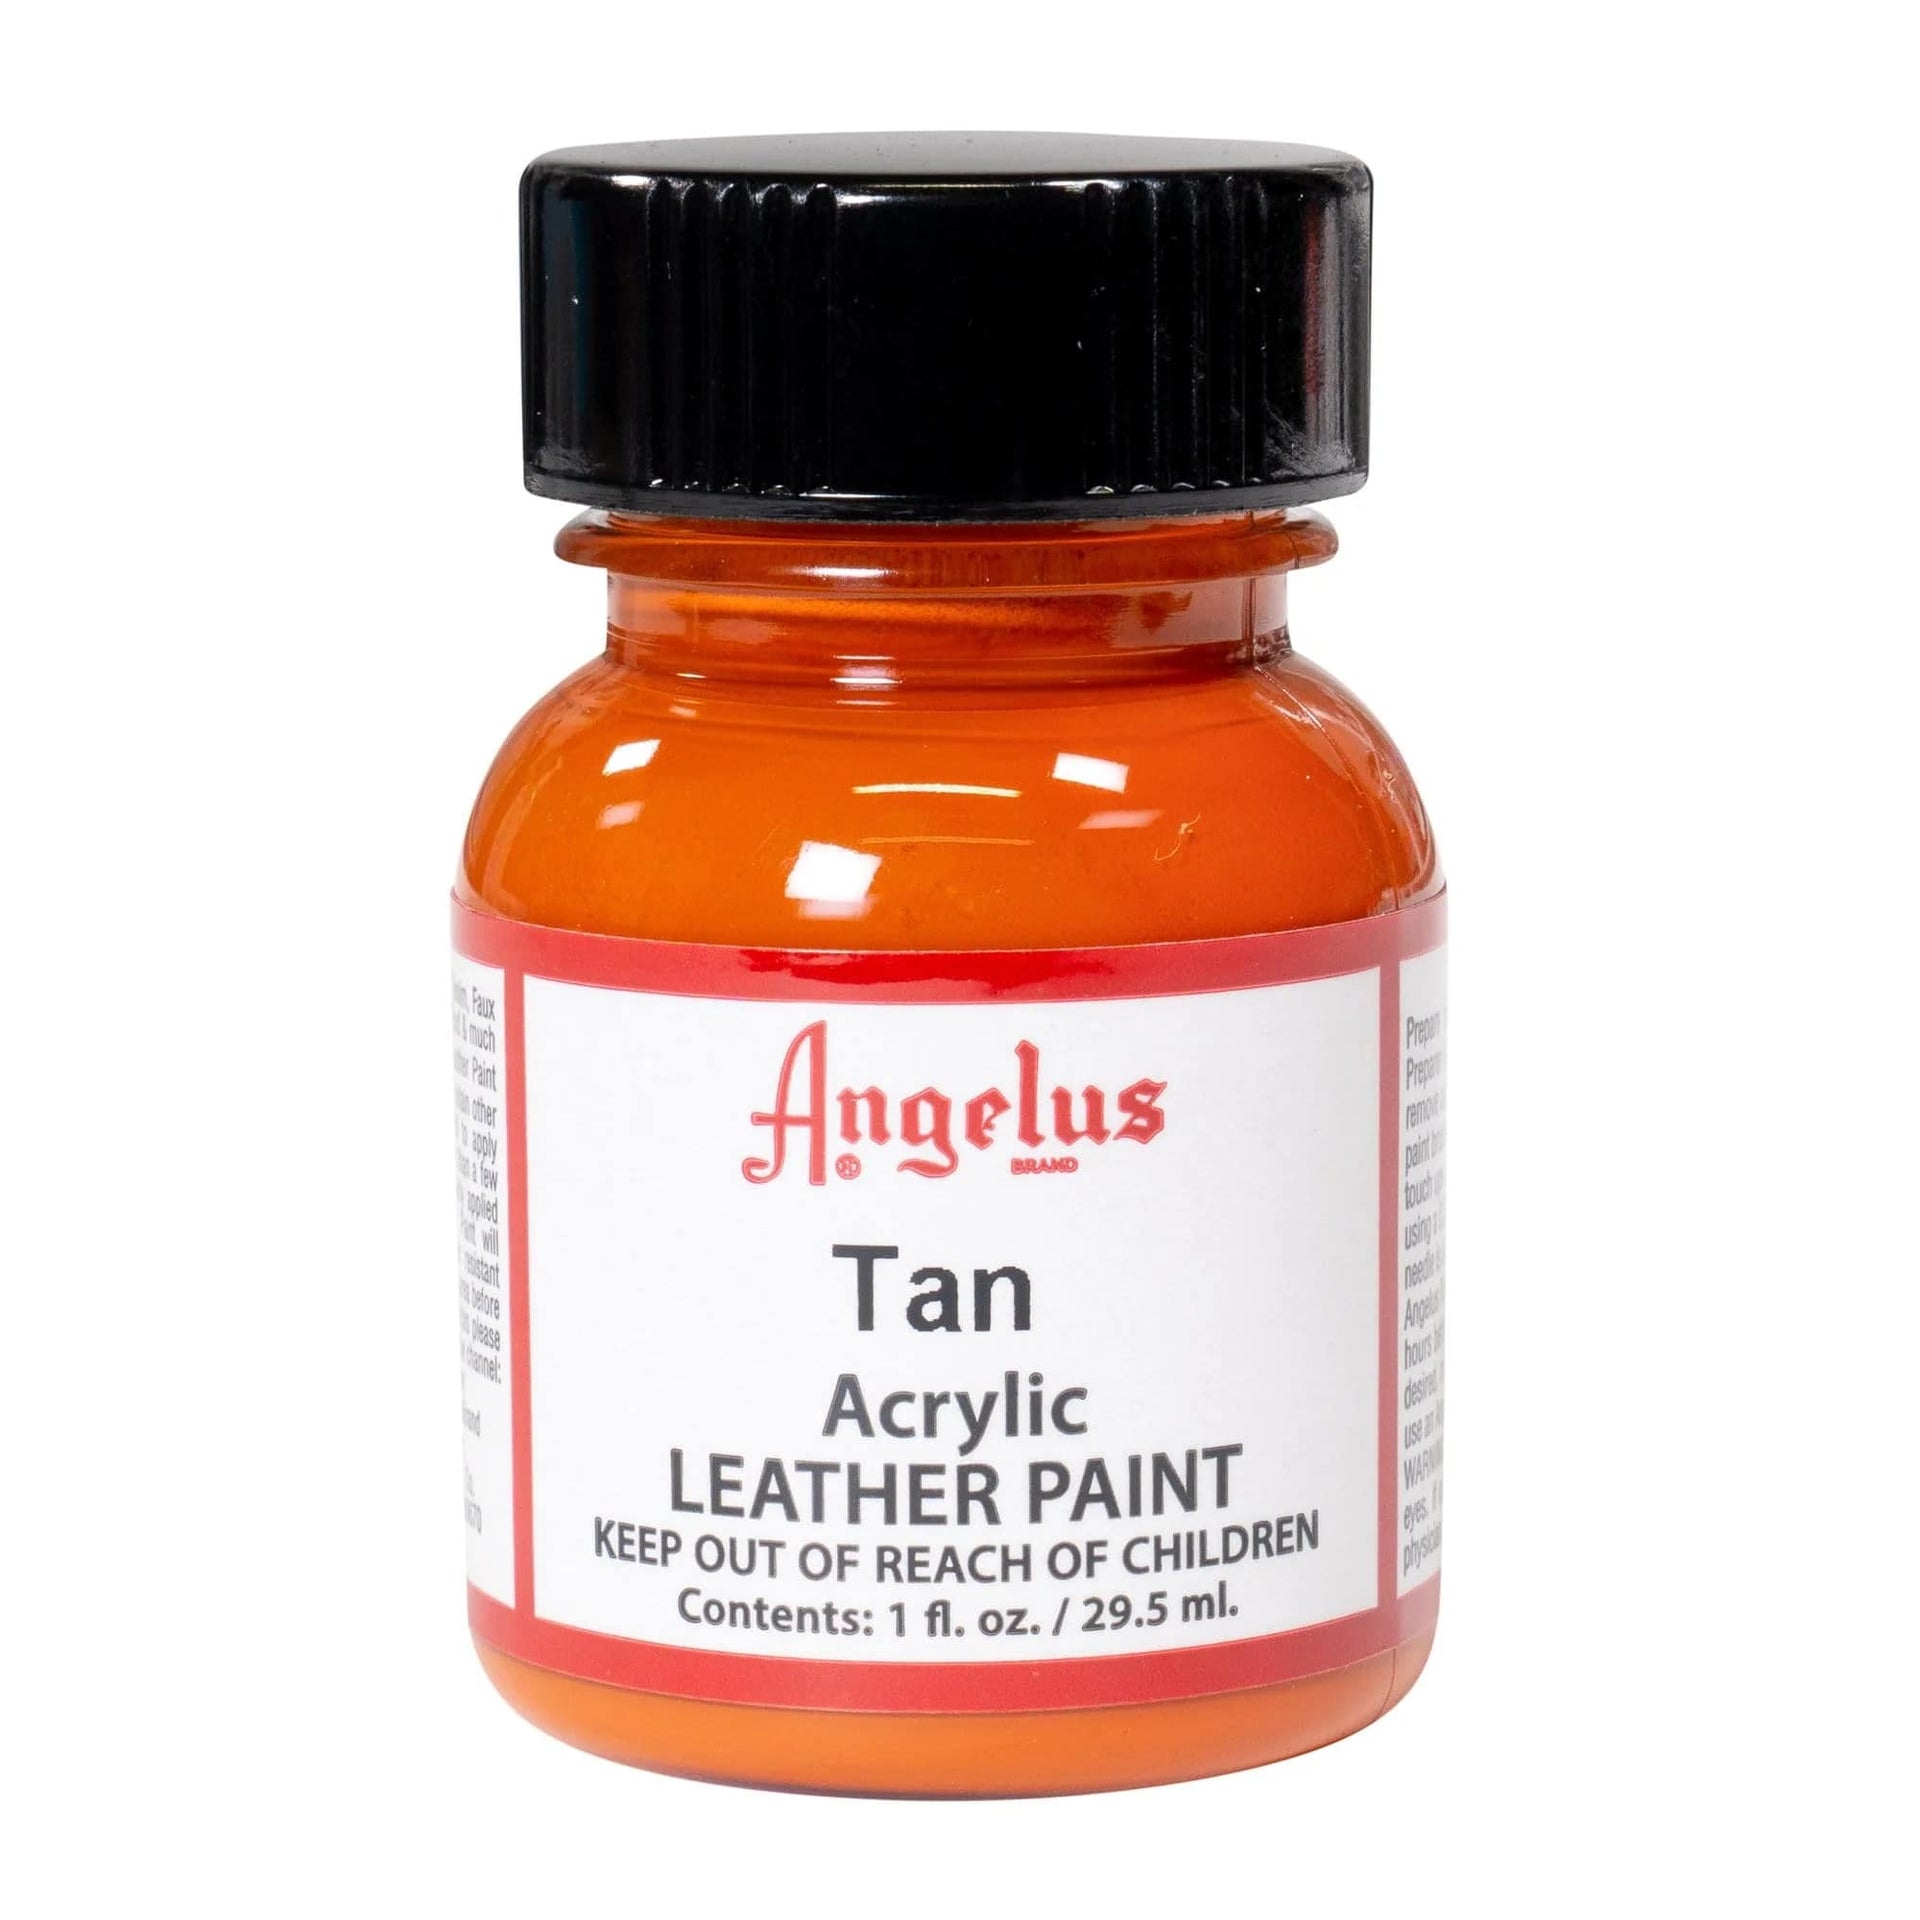 Angelus Acrylic Leather Paints, 1oz / 4oz, 1 oz / Tan | The Leather Guy